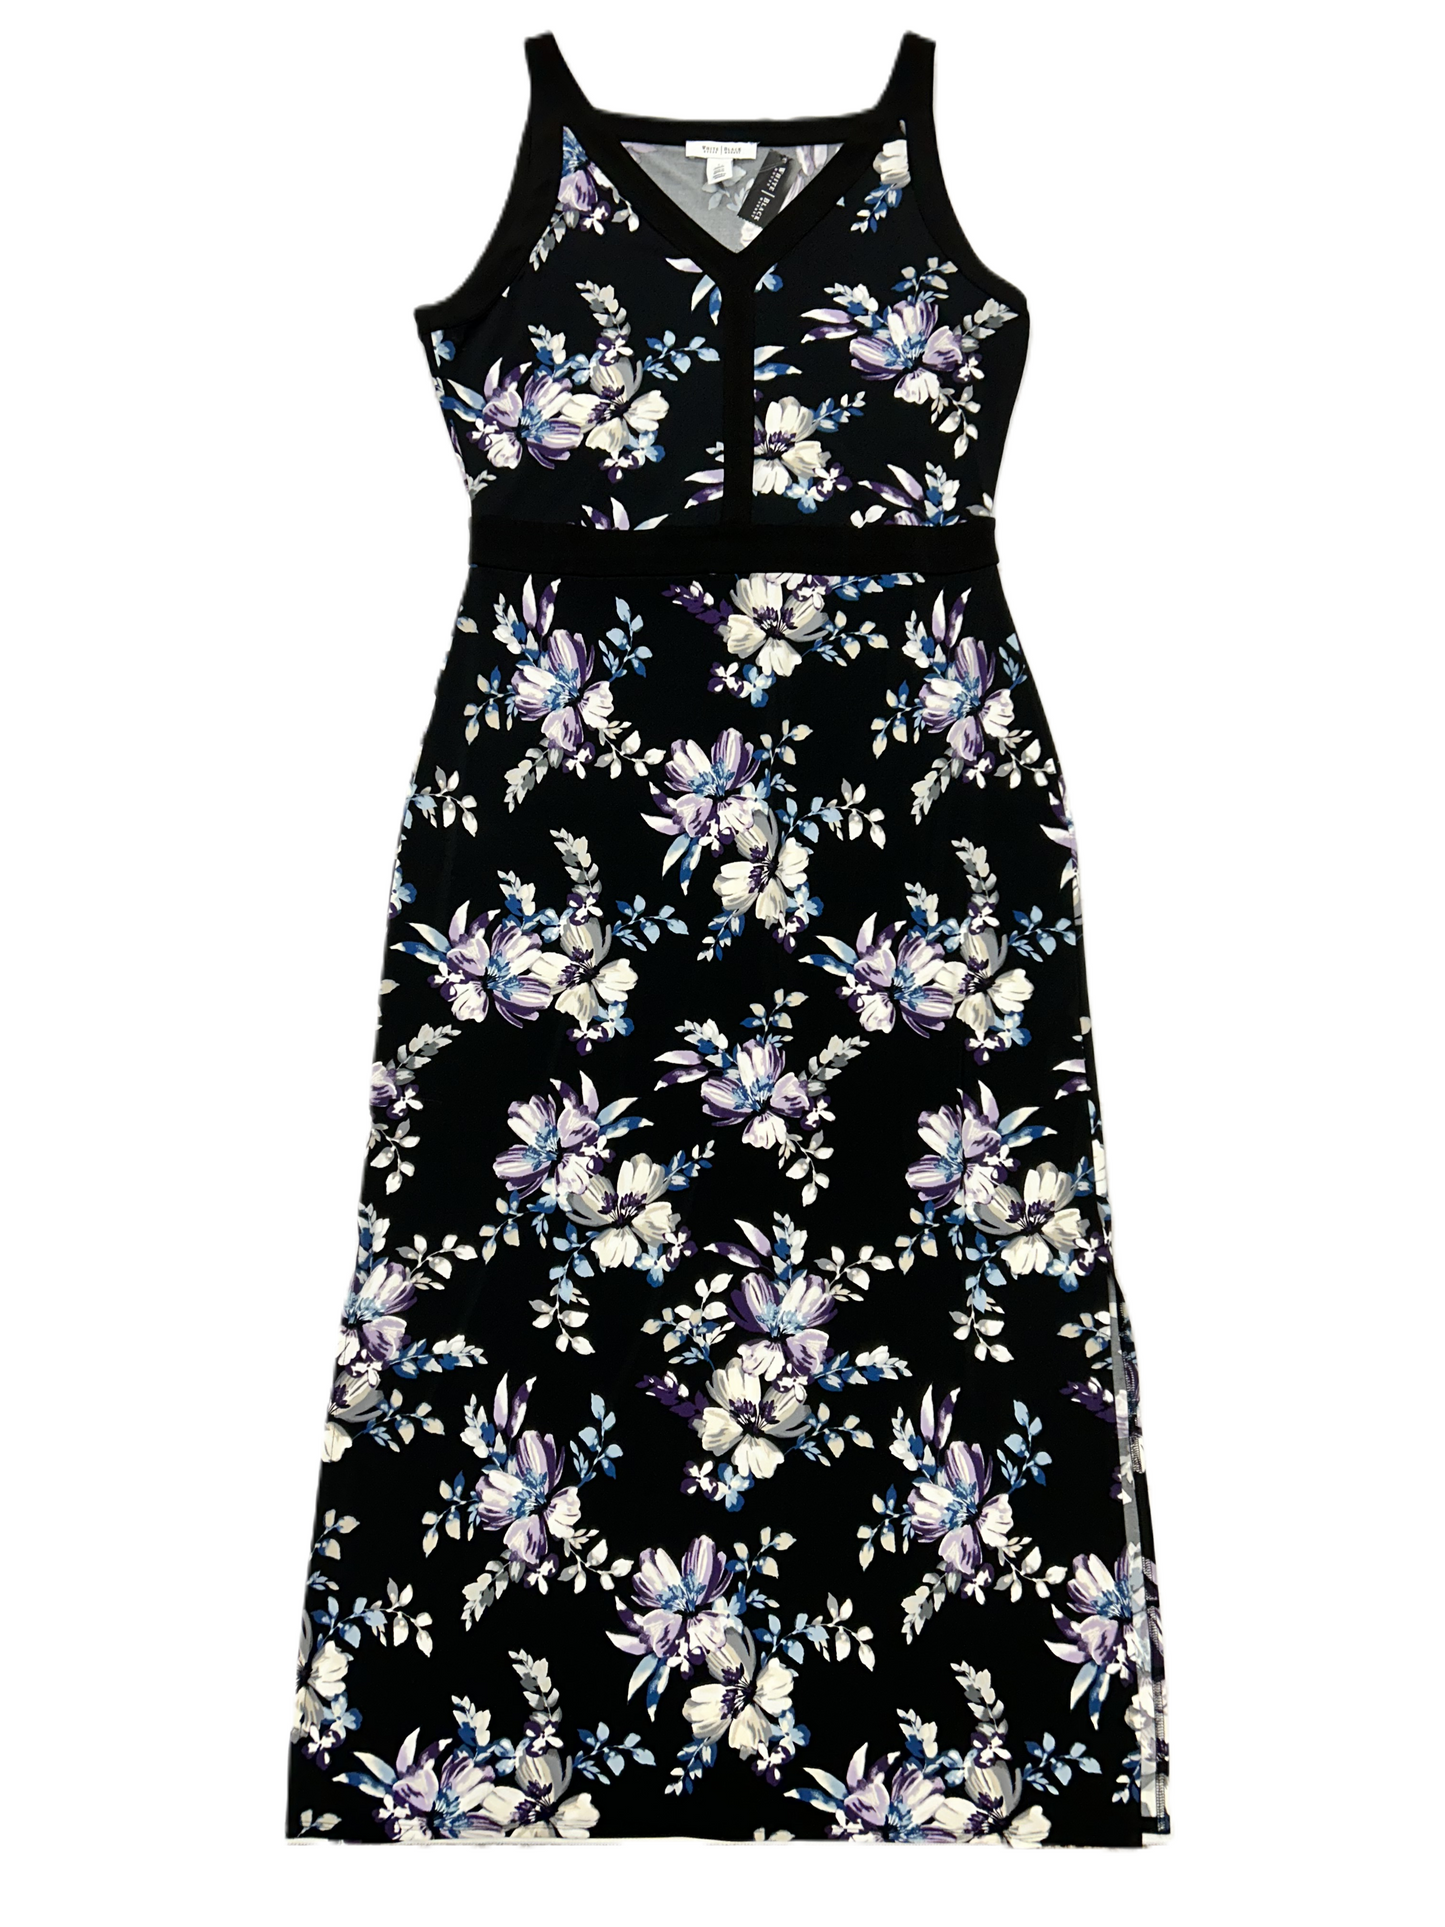 Dress Casual Maxi By White House Black Market  Size: L